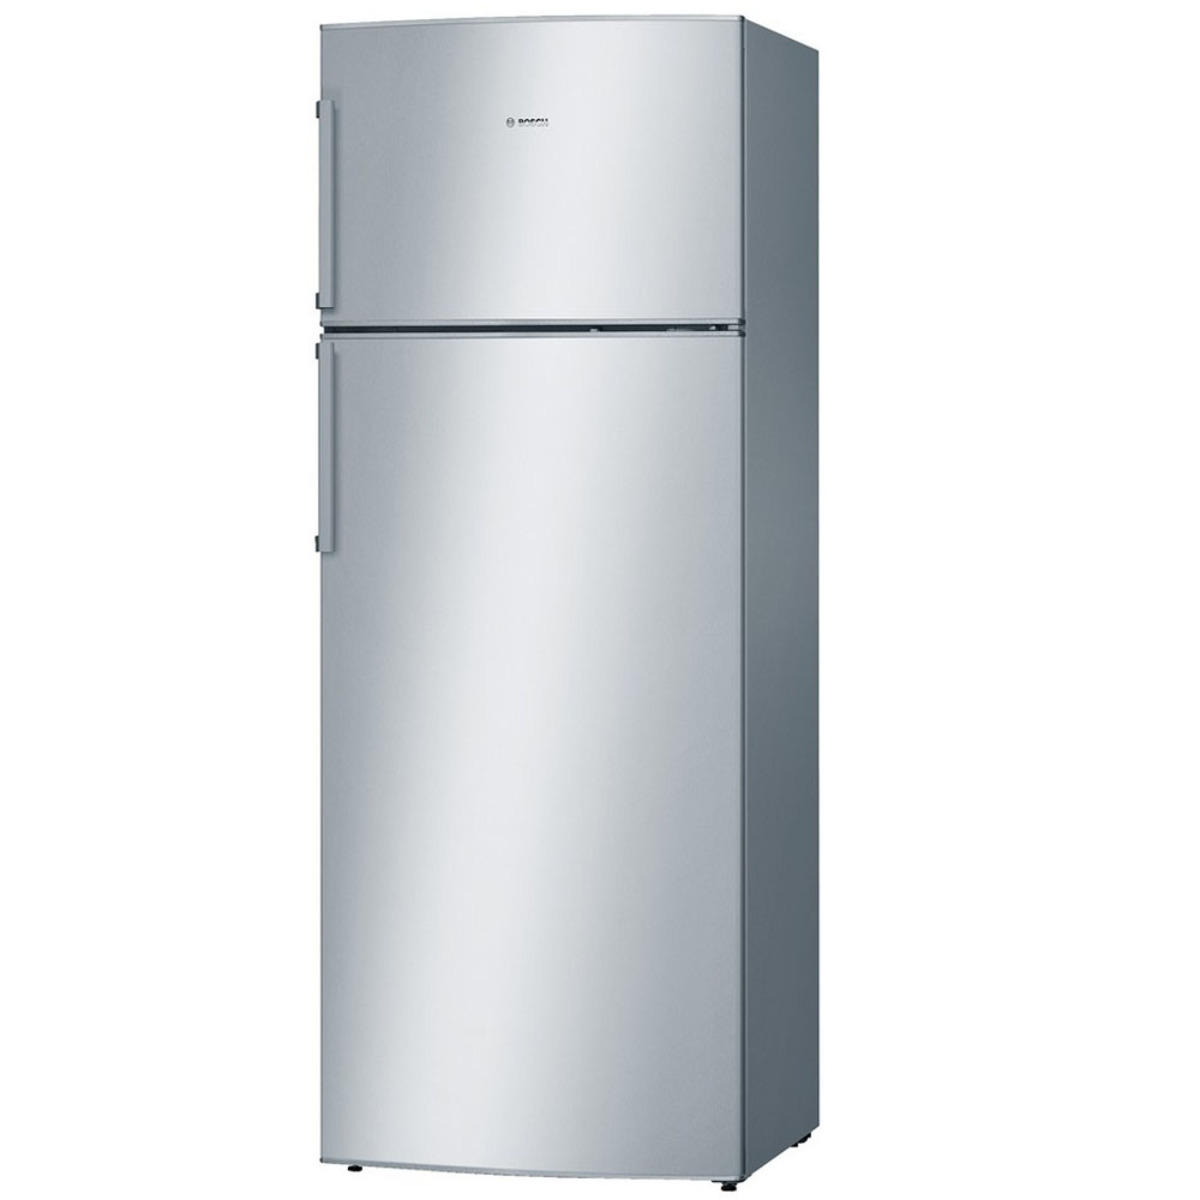 Bosch Top Mount Refrigerator Double Door Silver KDN56V120M